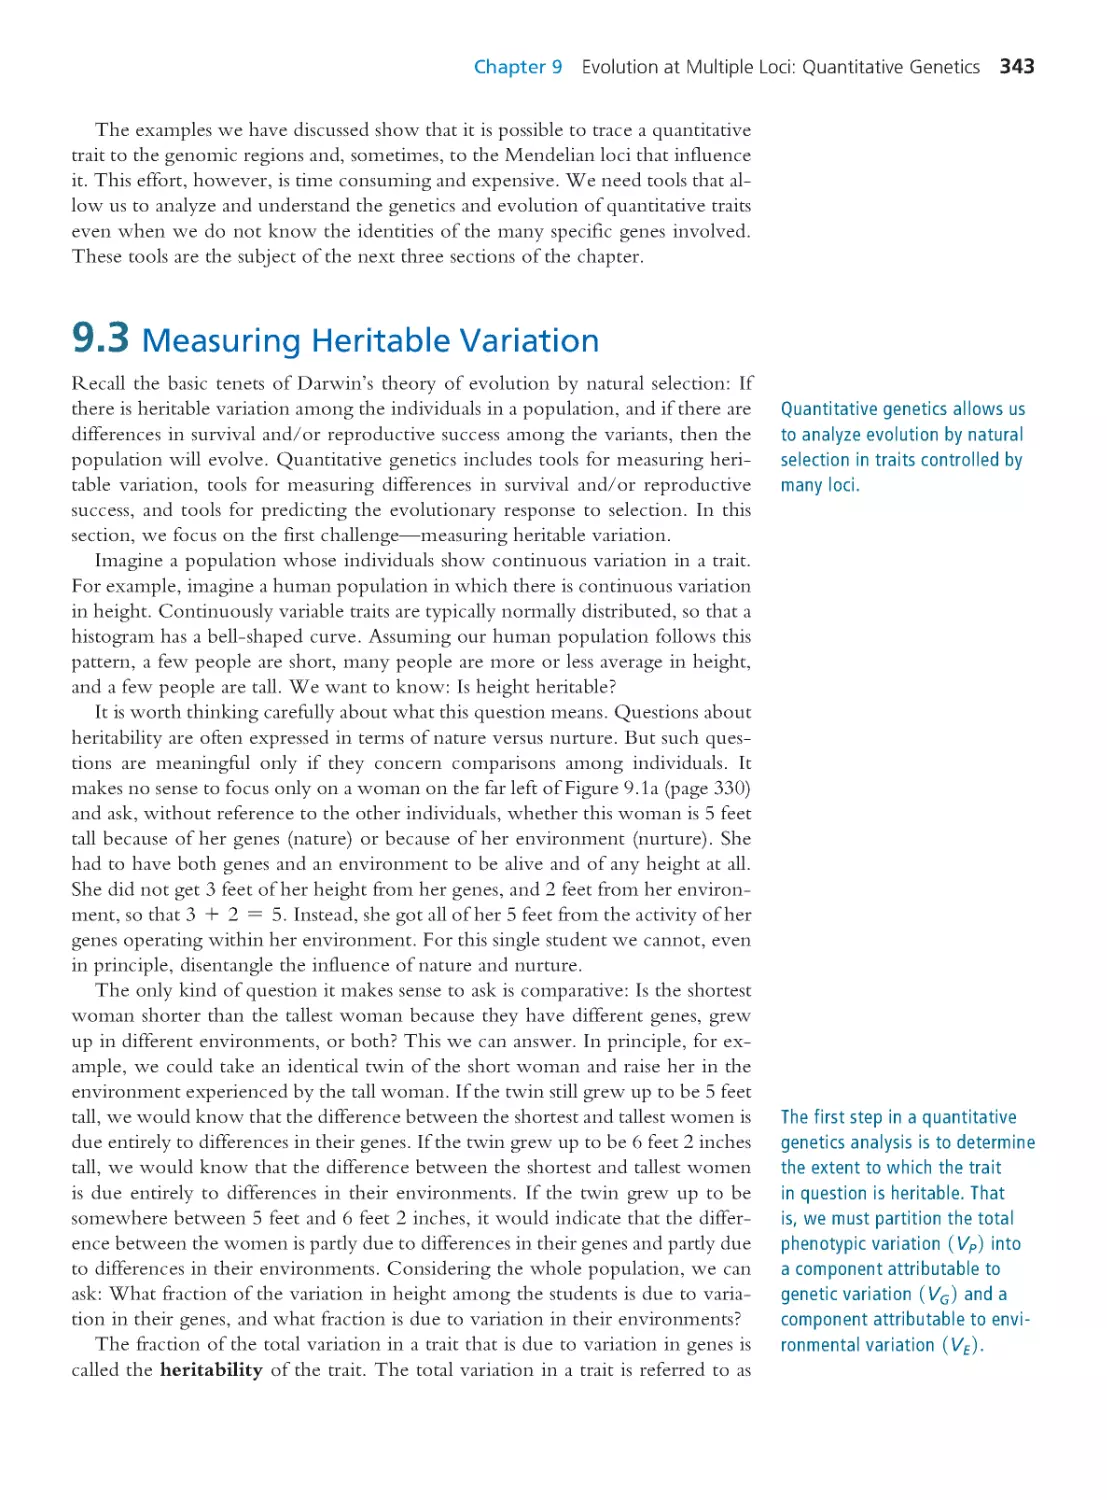 9.3 Measuring Heritable Variation